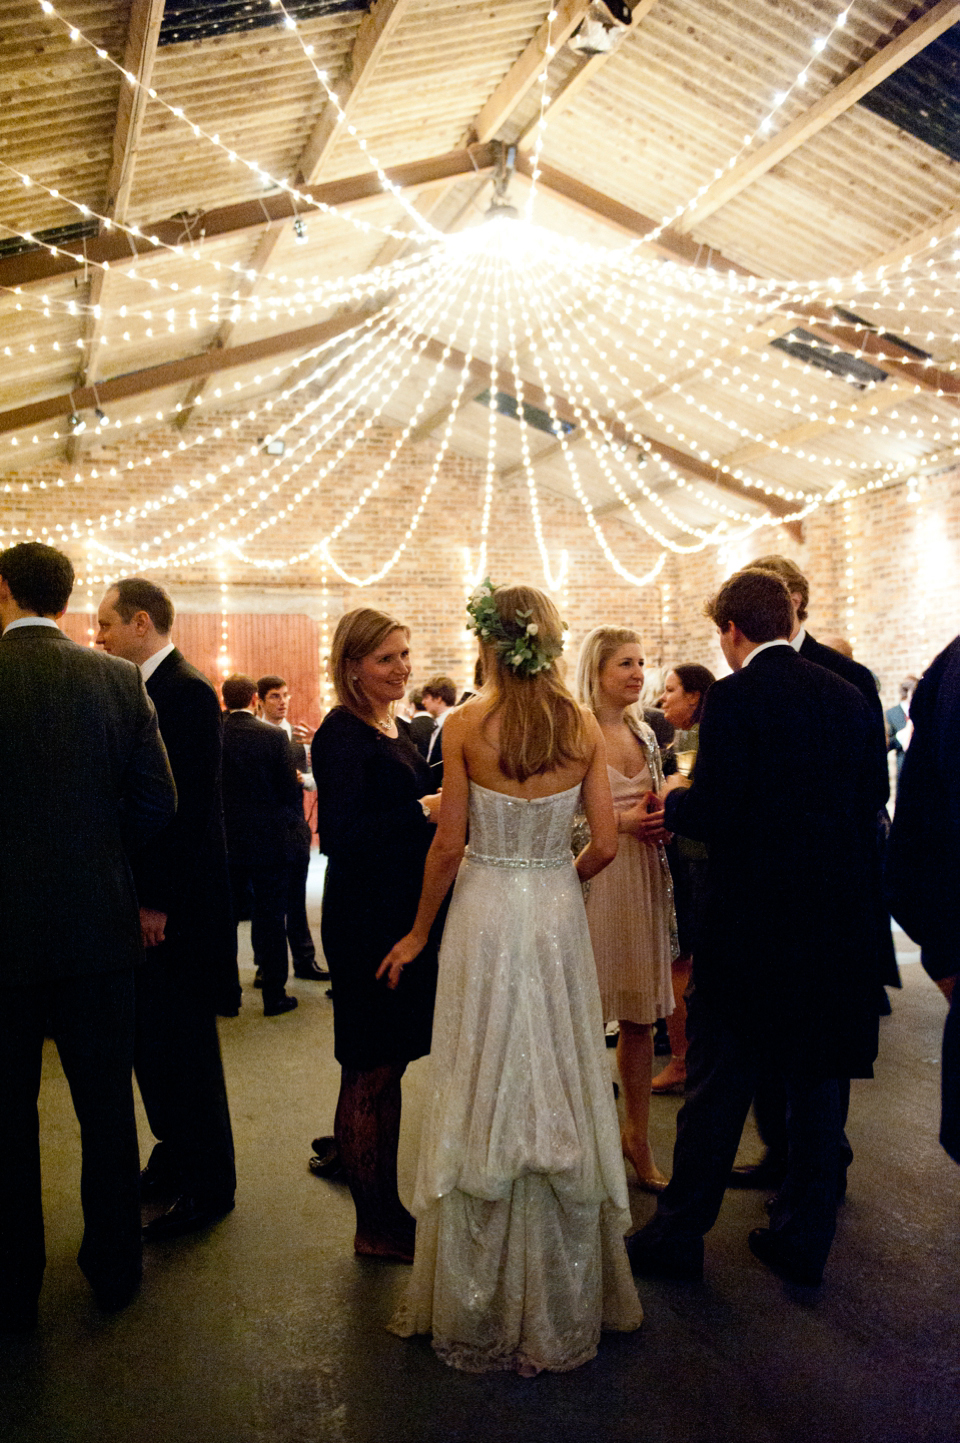 Kobus Dippenaar // Cosy candlelit winter wedding // Fiona Macneill Photography